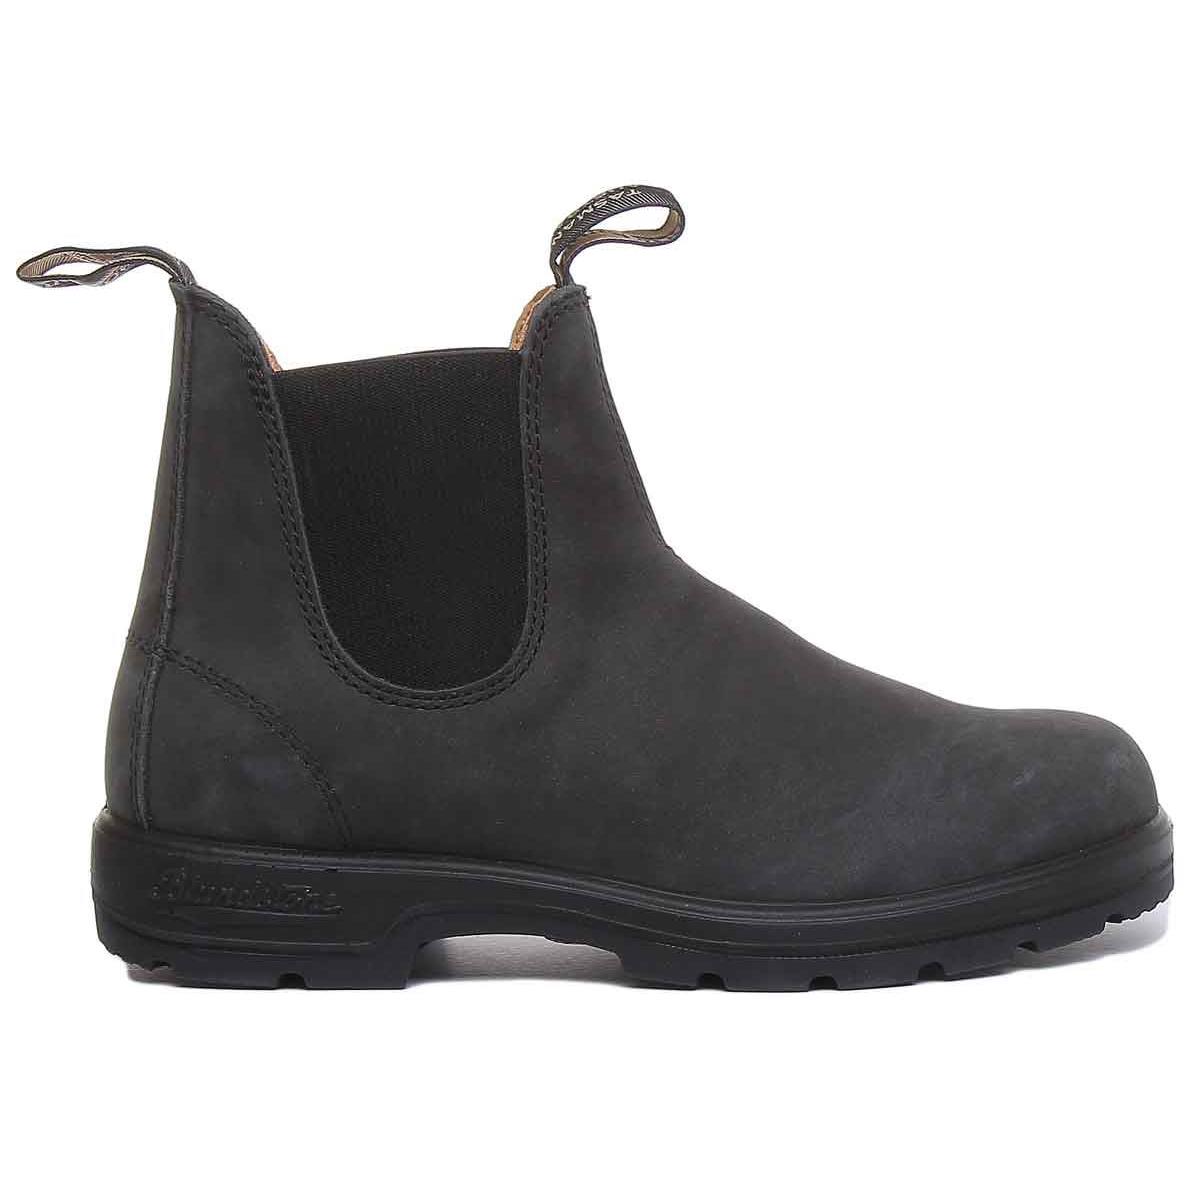 Blundstone 587 In Black Black Premium Leather Size US 4 - 9